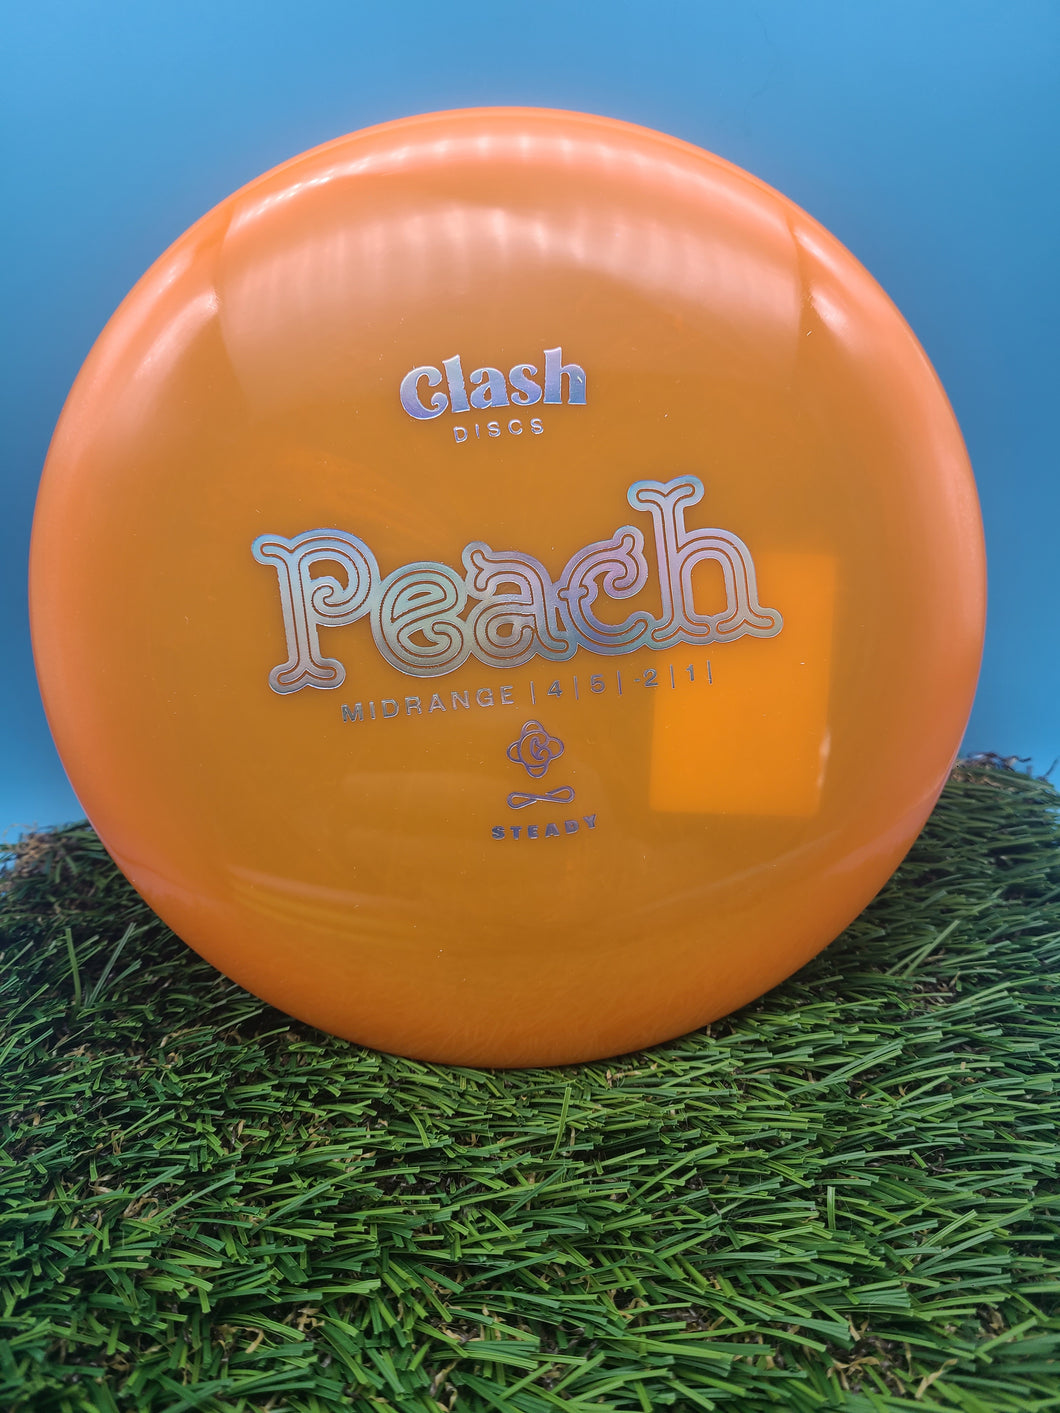 Clash Discs Steady Plastic Peach Midrange